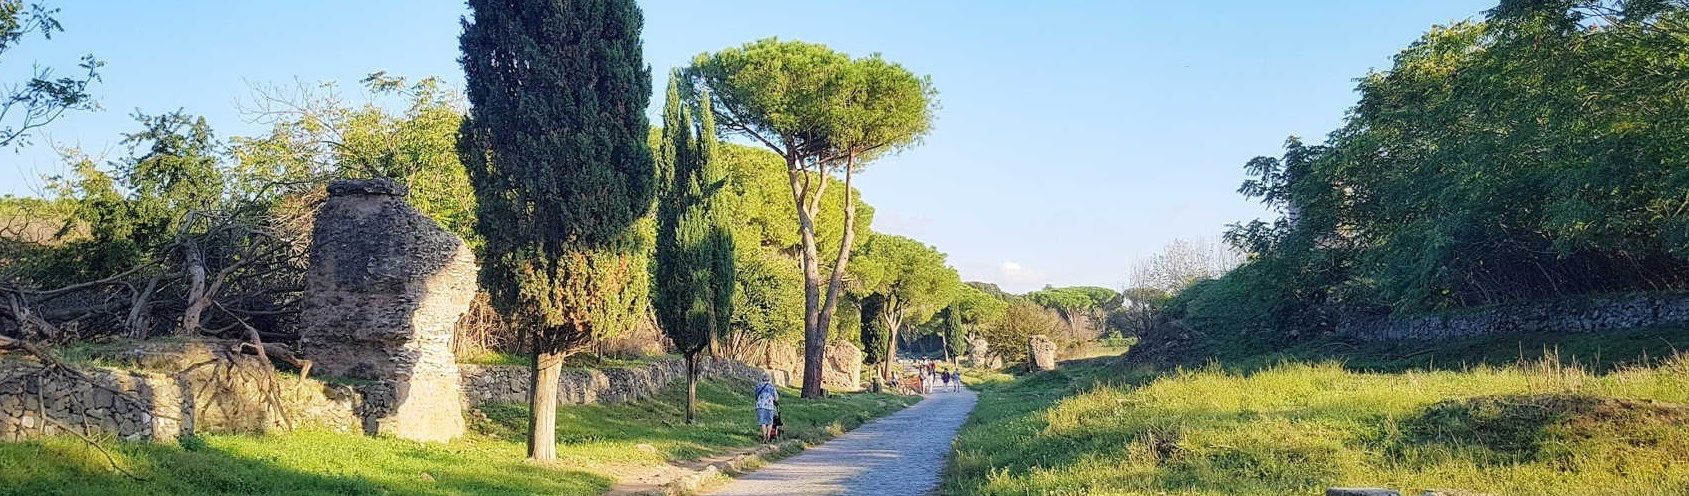 Appia antica, header